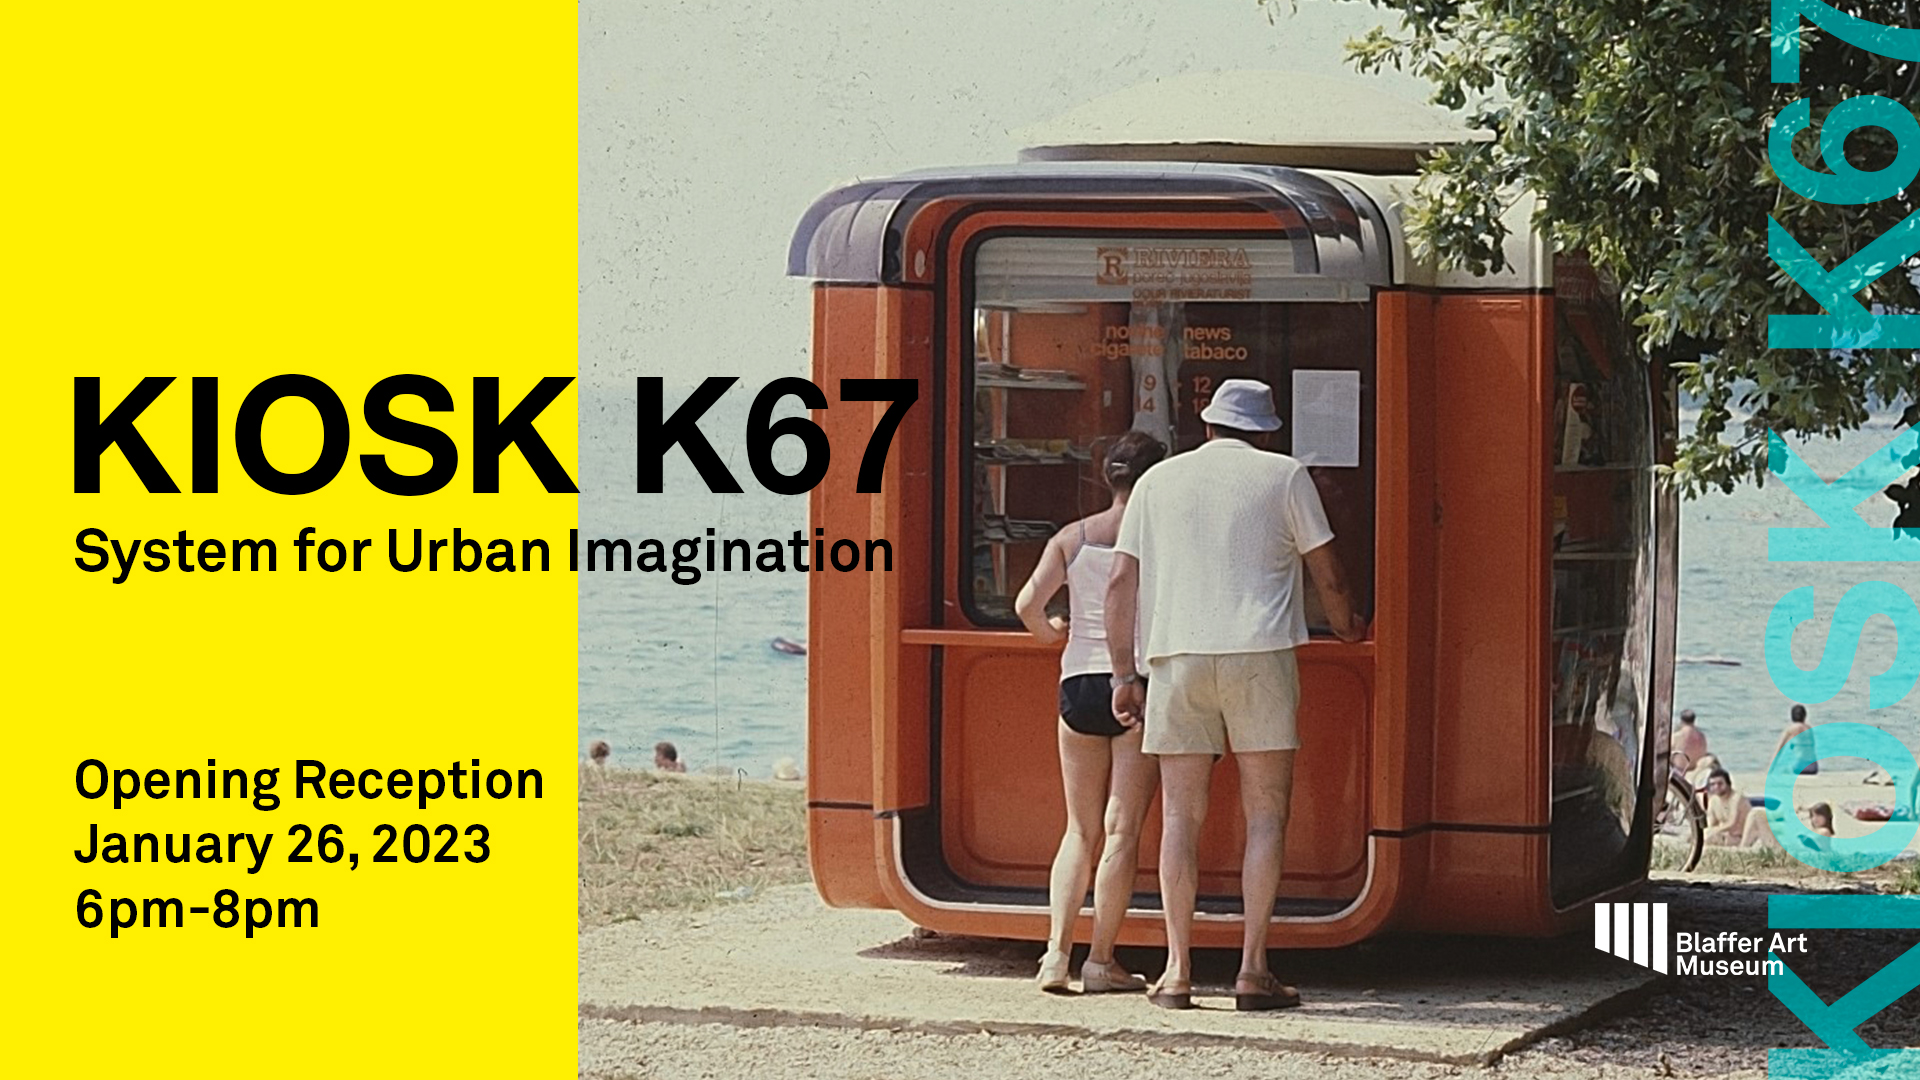 Kiosk K67, Blaffer Art Museum, Opening Reception